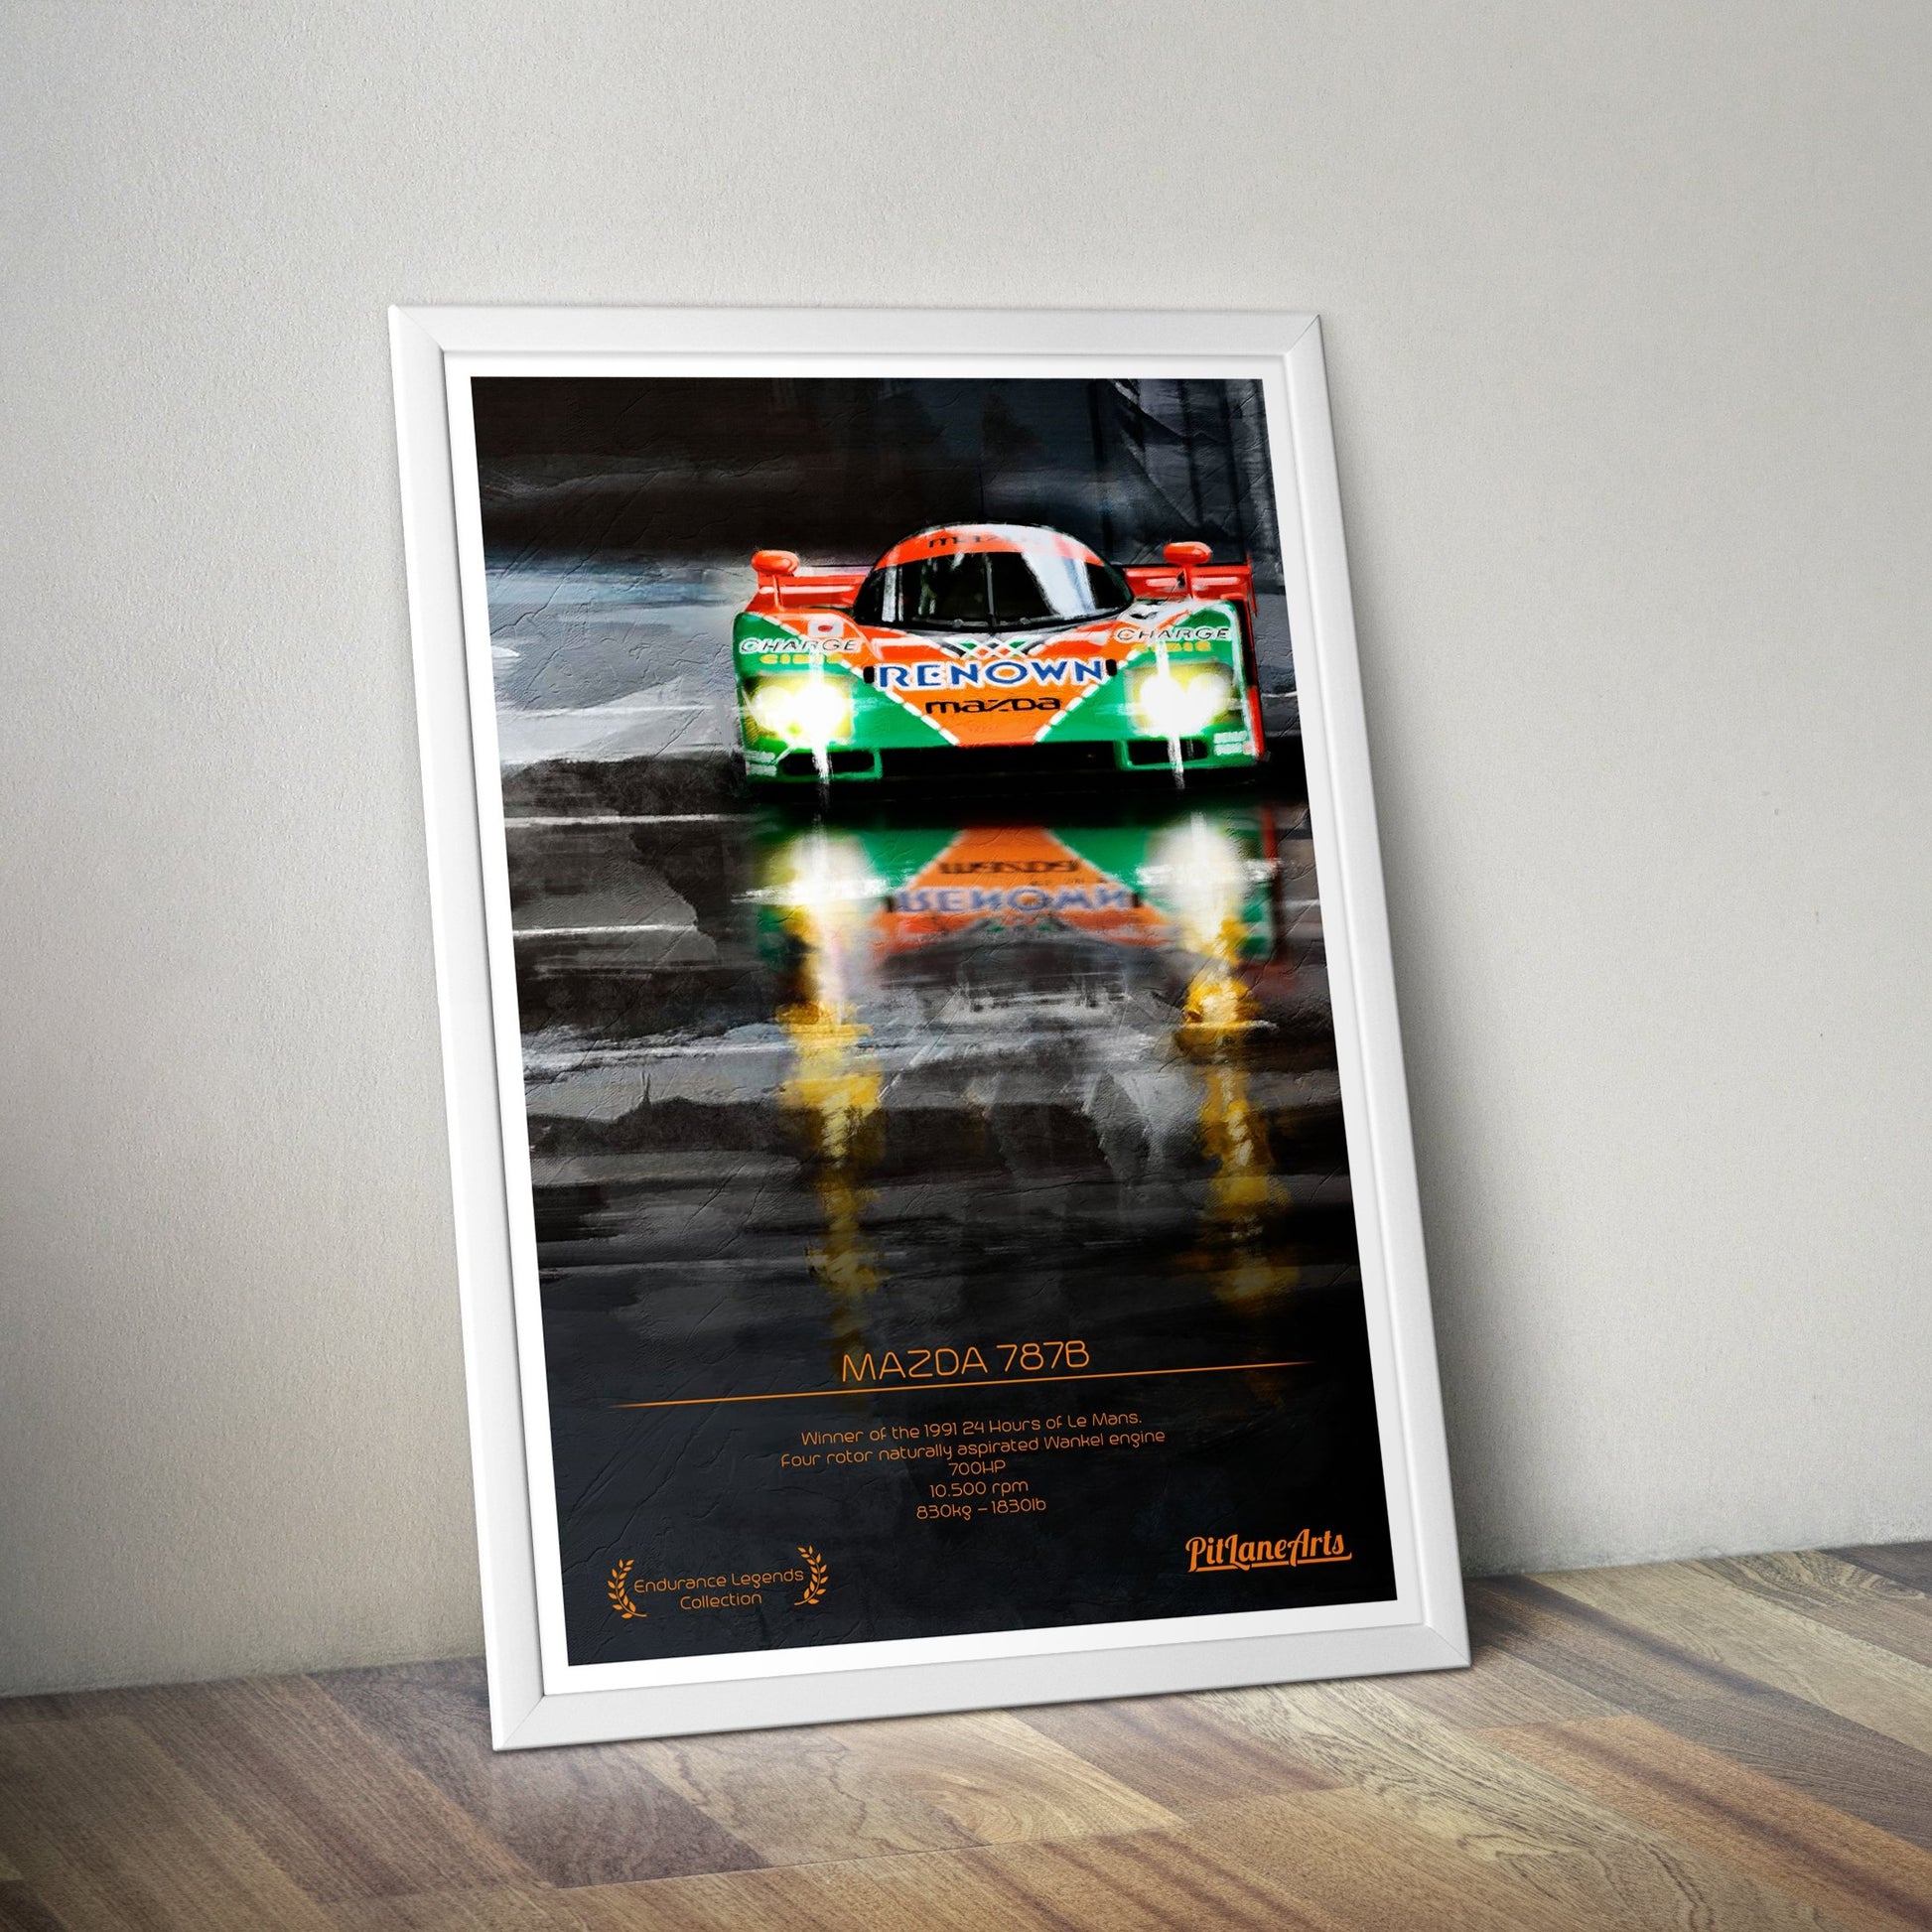 Framed Mazda 787 B Le Mans race car Poster print - PitLaneArts